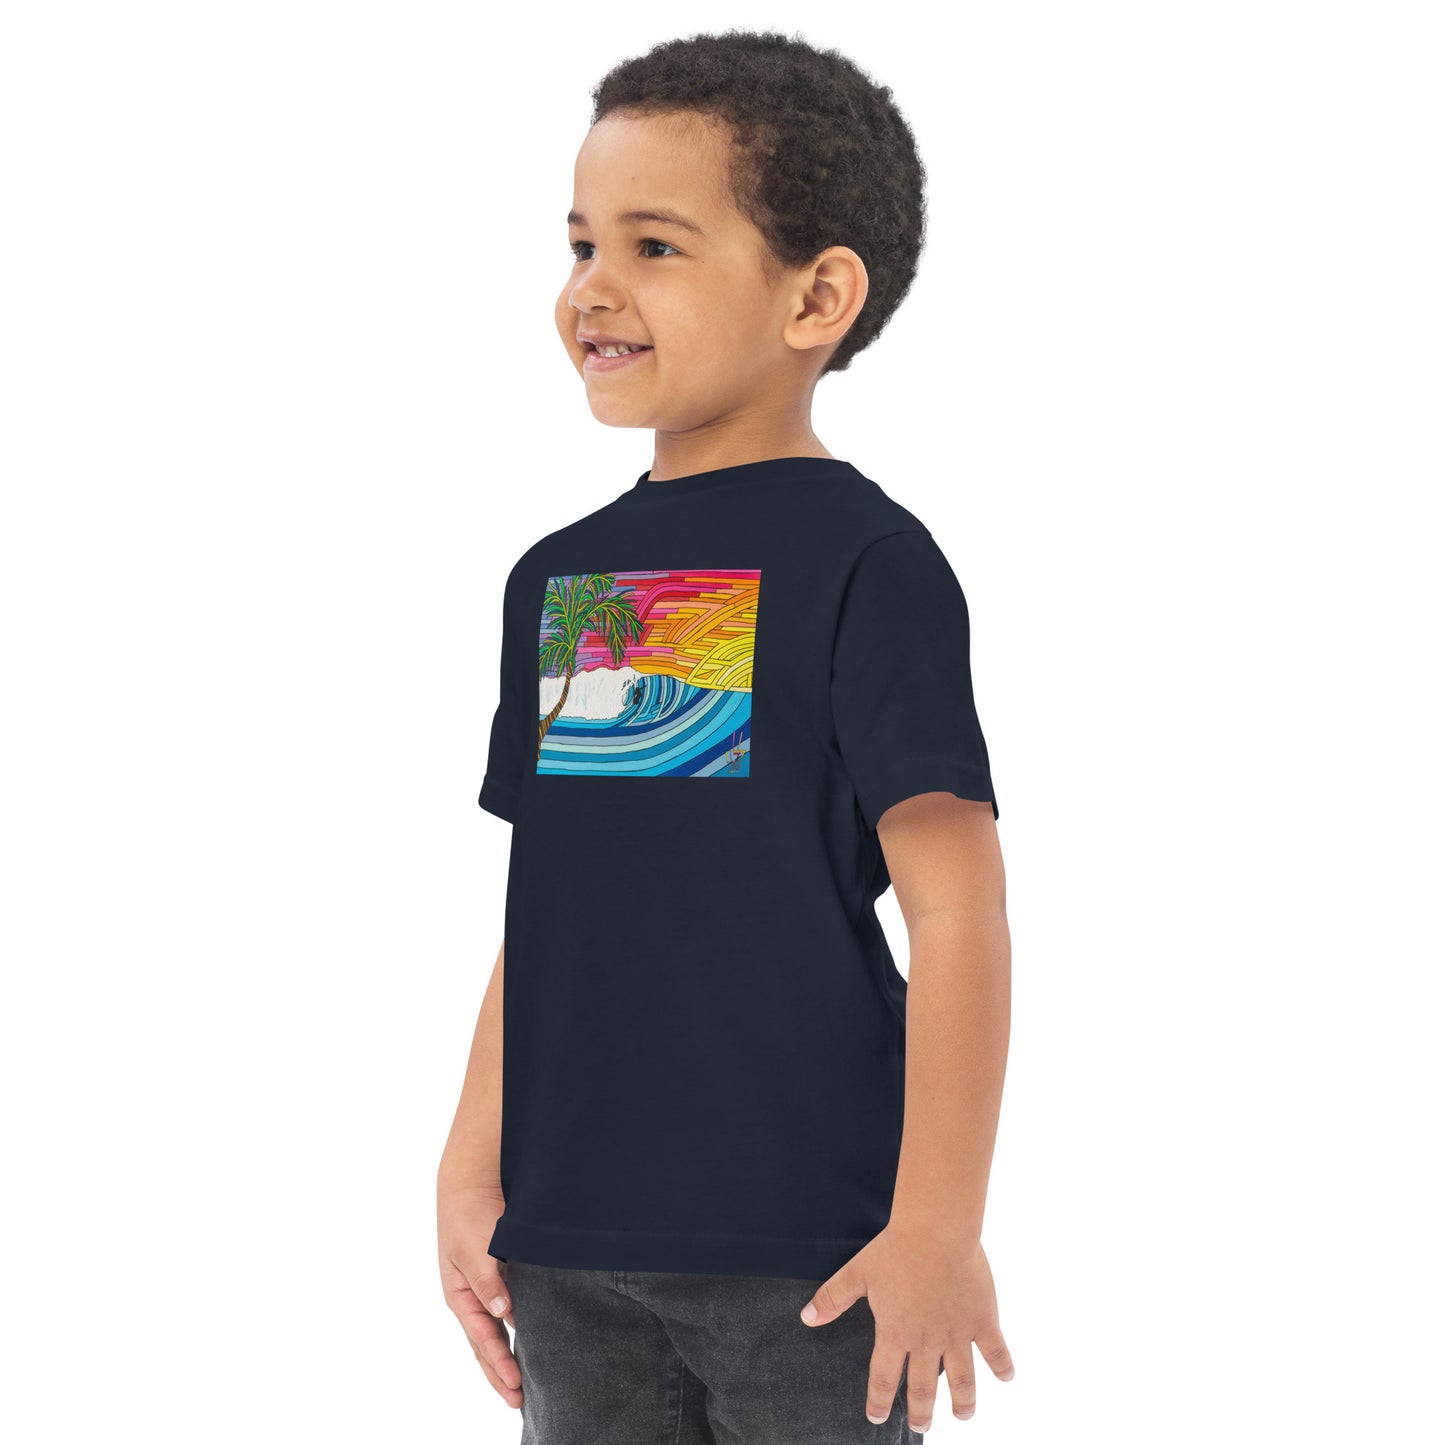 Palm Tree Sunset Surf - Toddler jersey t-shirt